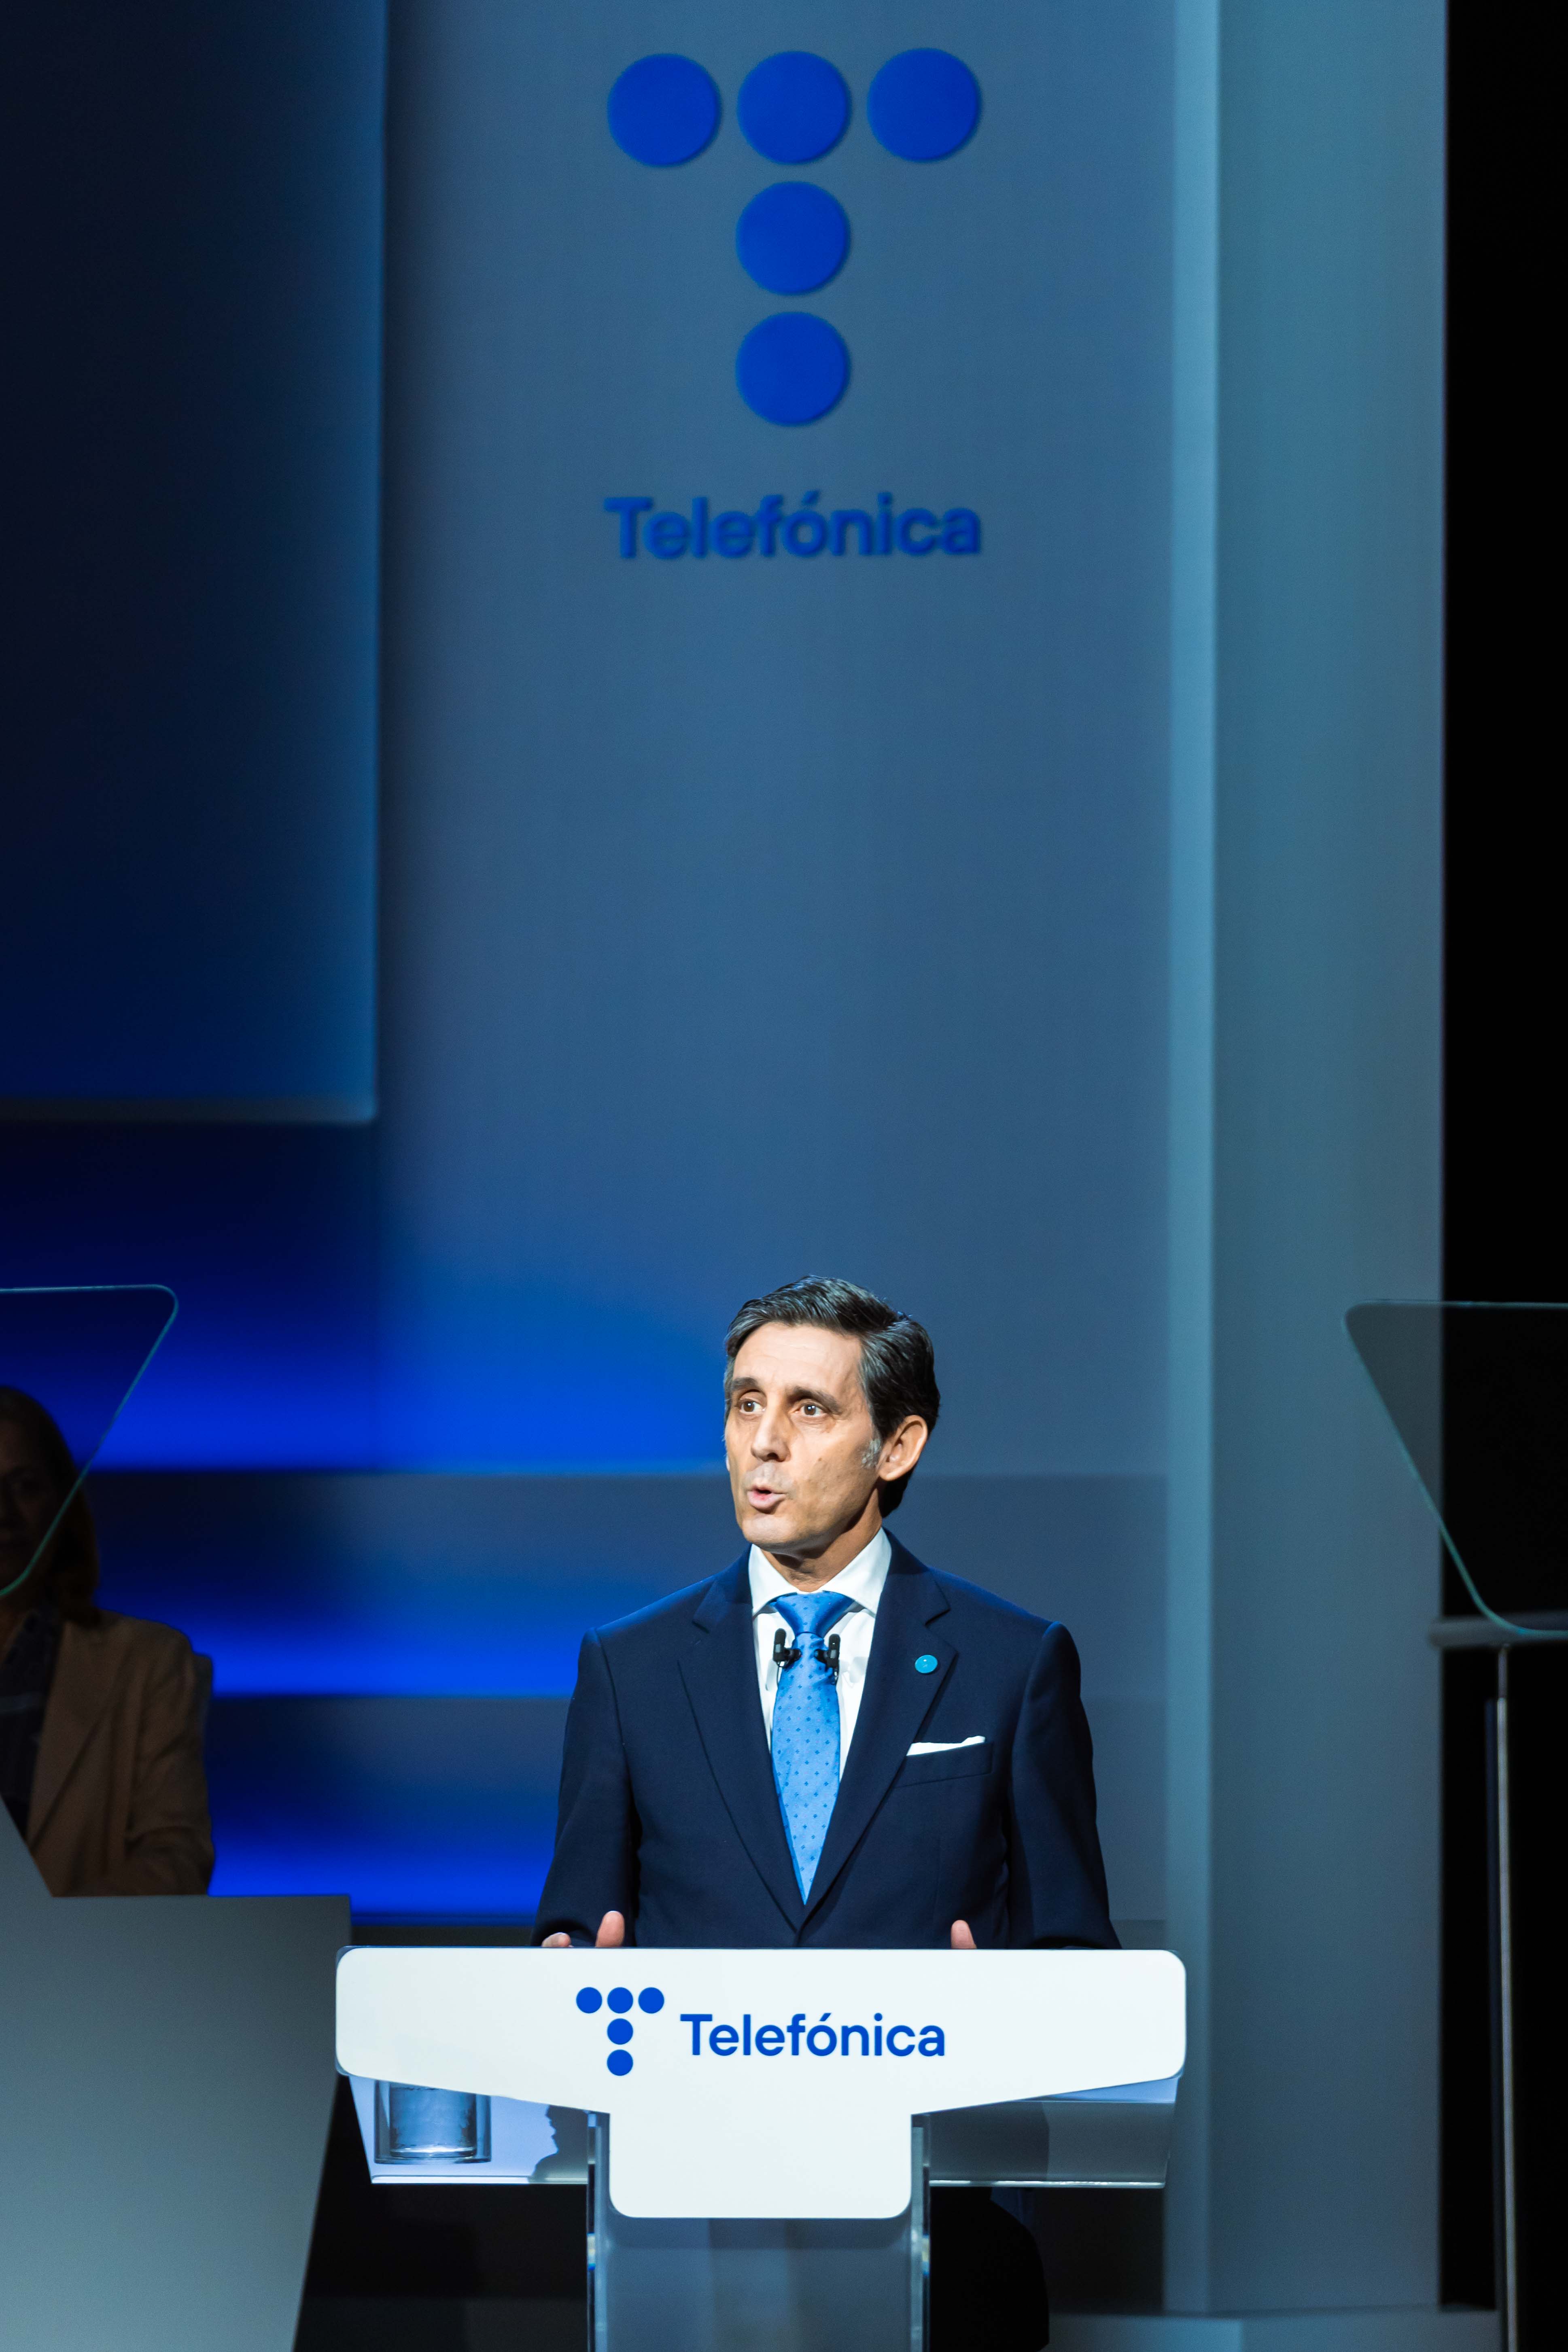 José María Álvarez-Pallete, Chairman of Telefónica